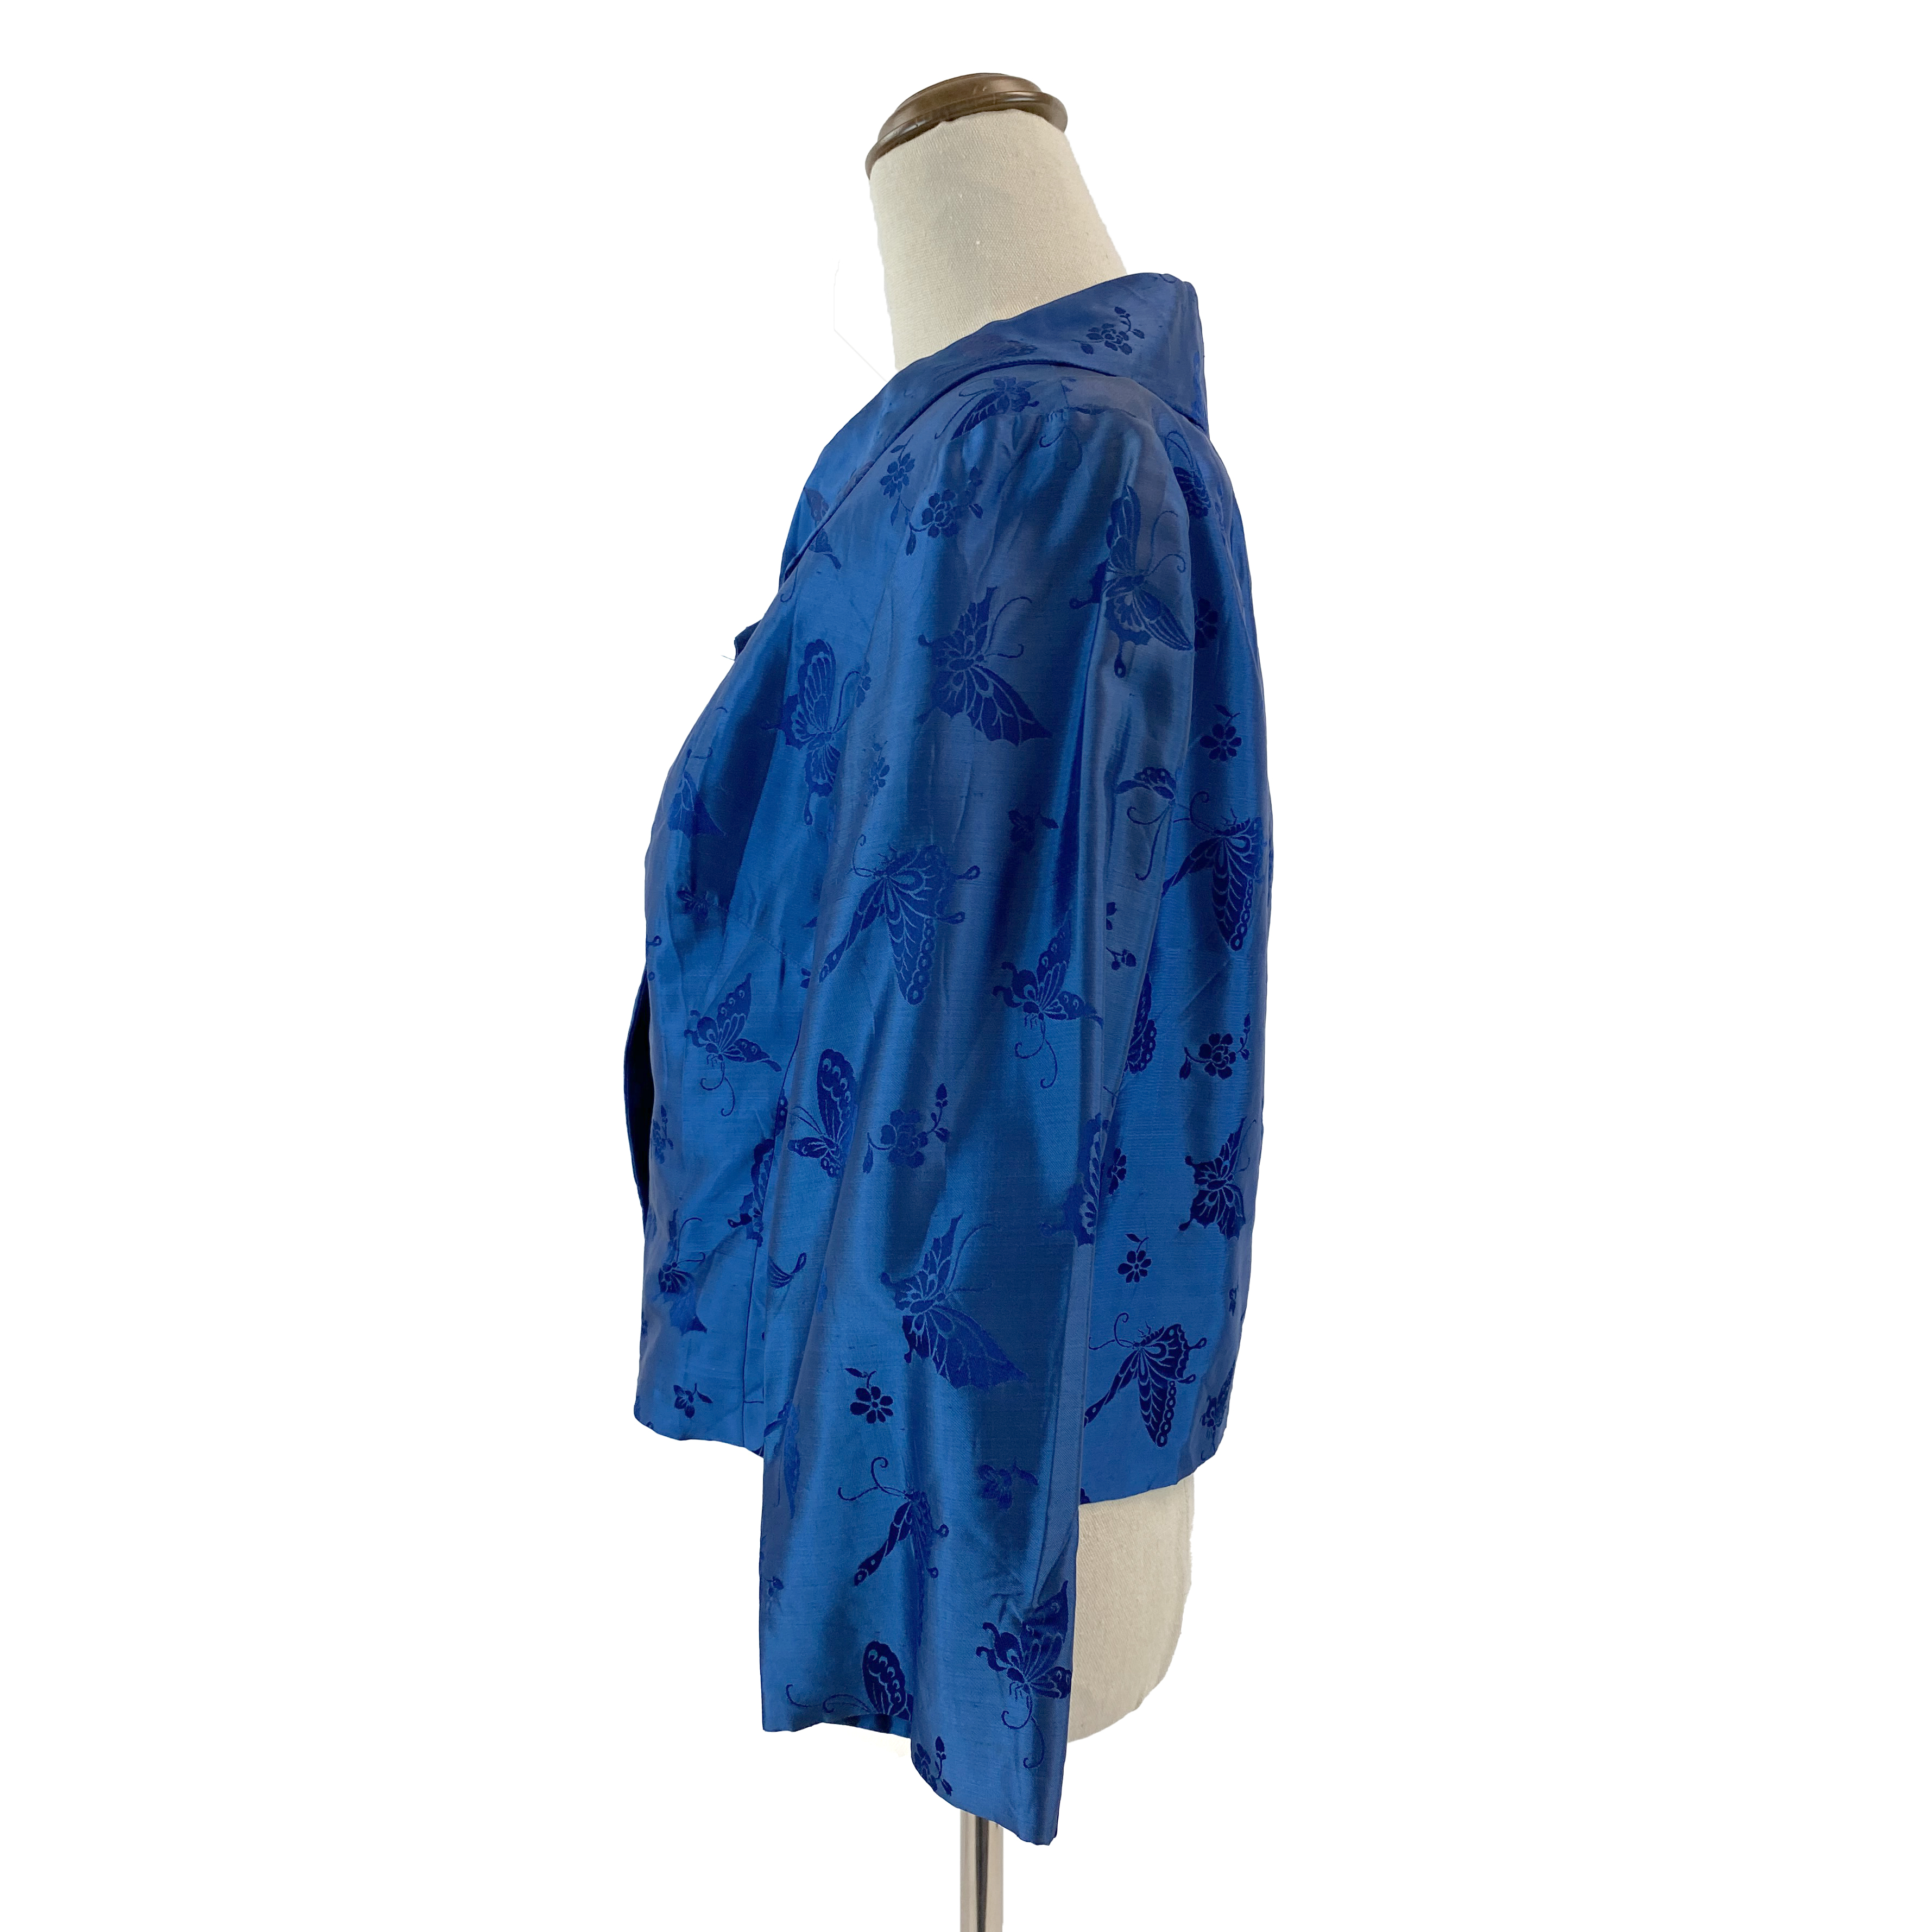 Maria Docx 60s Style Vibrant Blue Jacket